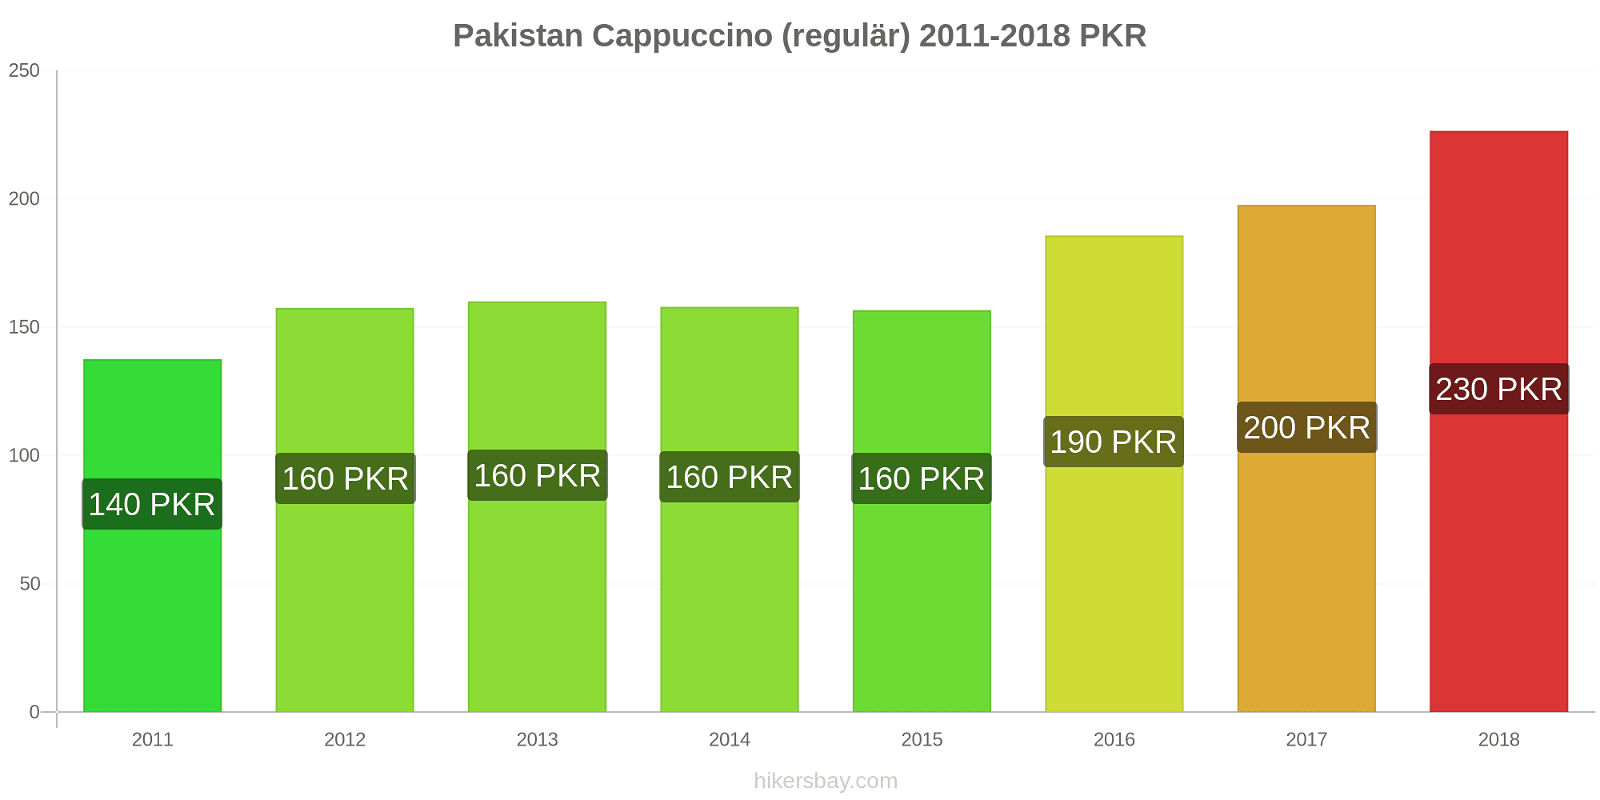 Pakistan Preisänderungen Cappuccino (regulär) hikersbay.com